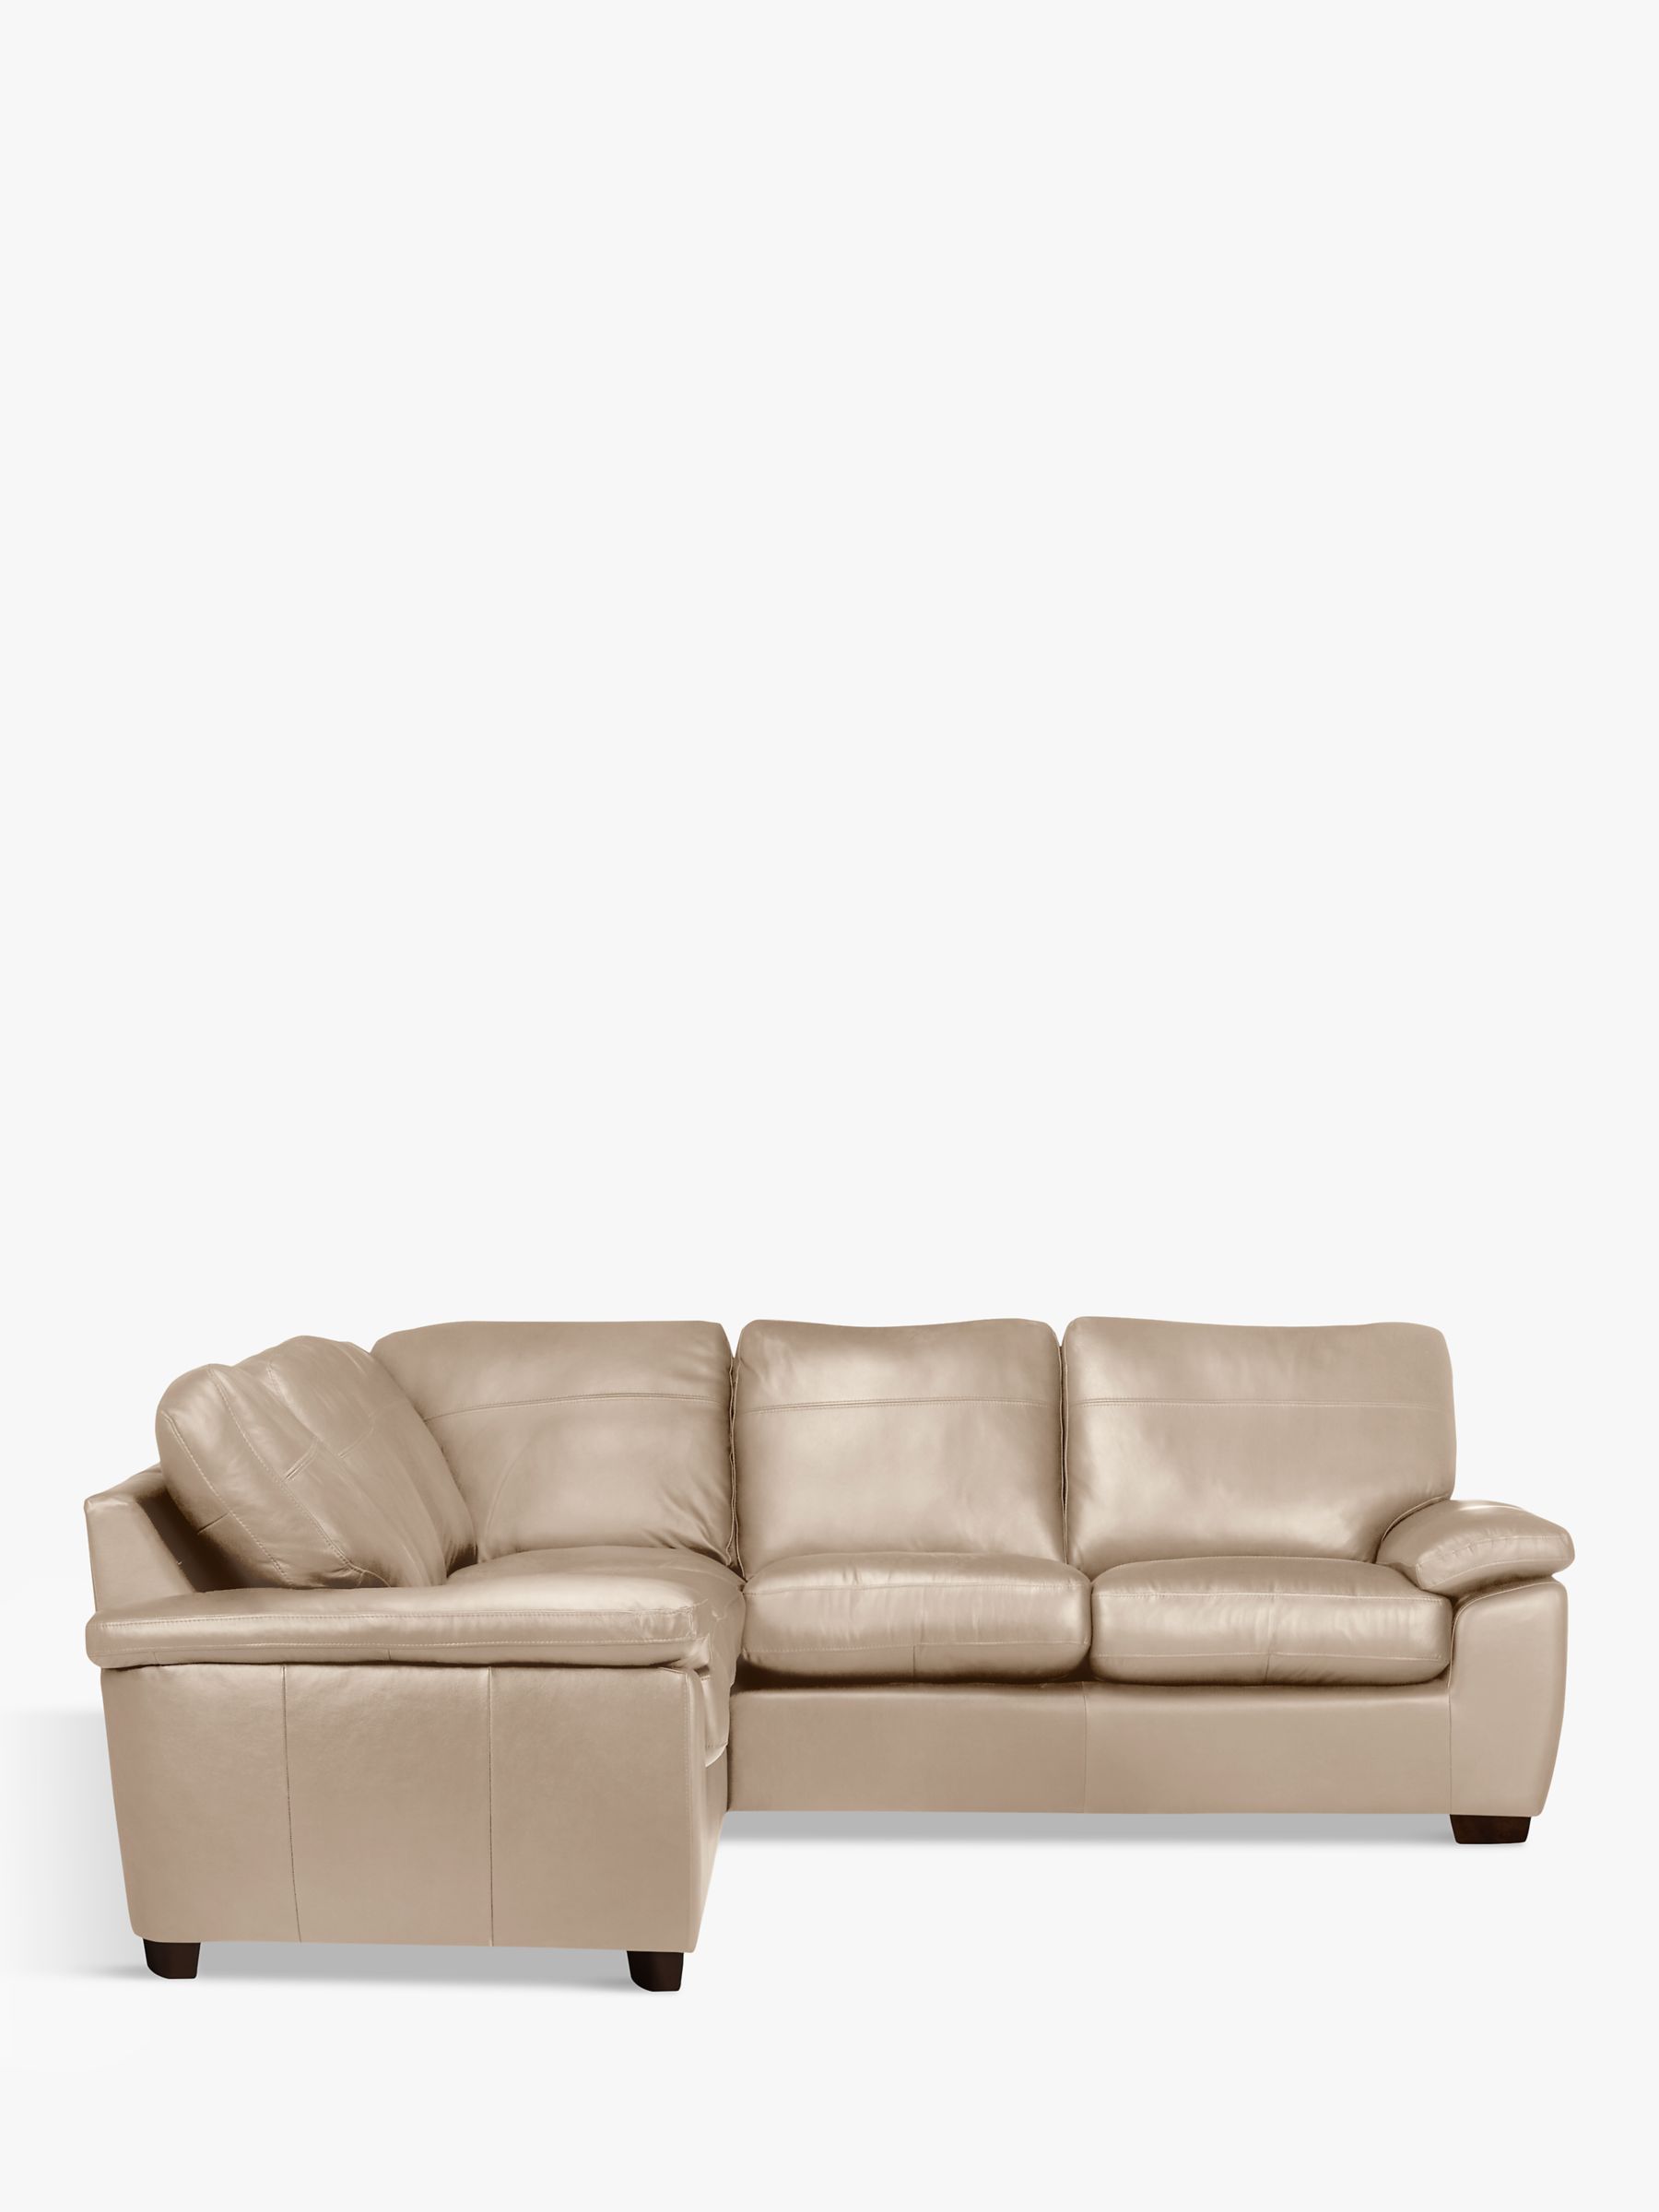 John Lewis Camden 5+ Seater Leather Corner Sofa, Dark Leg